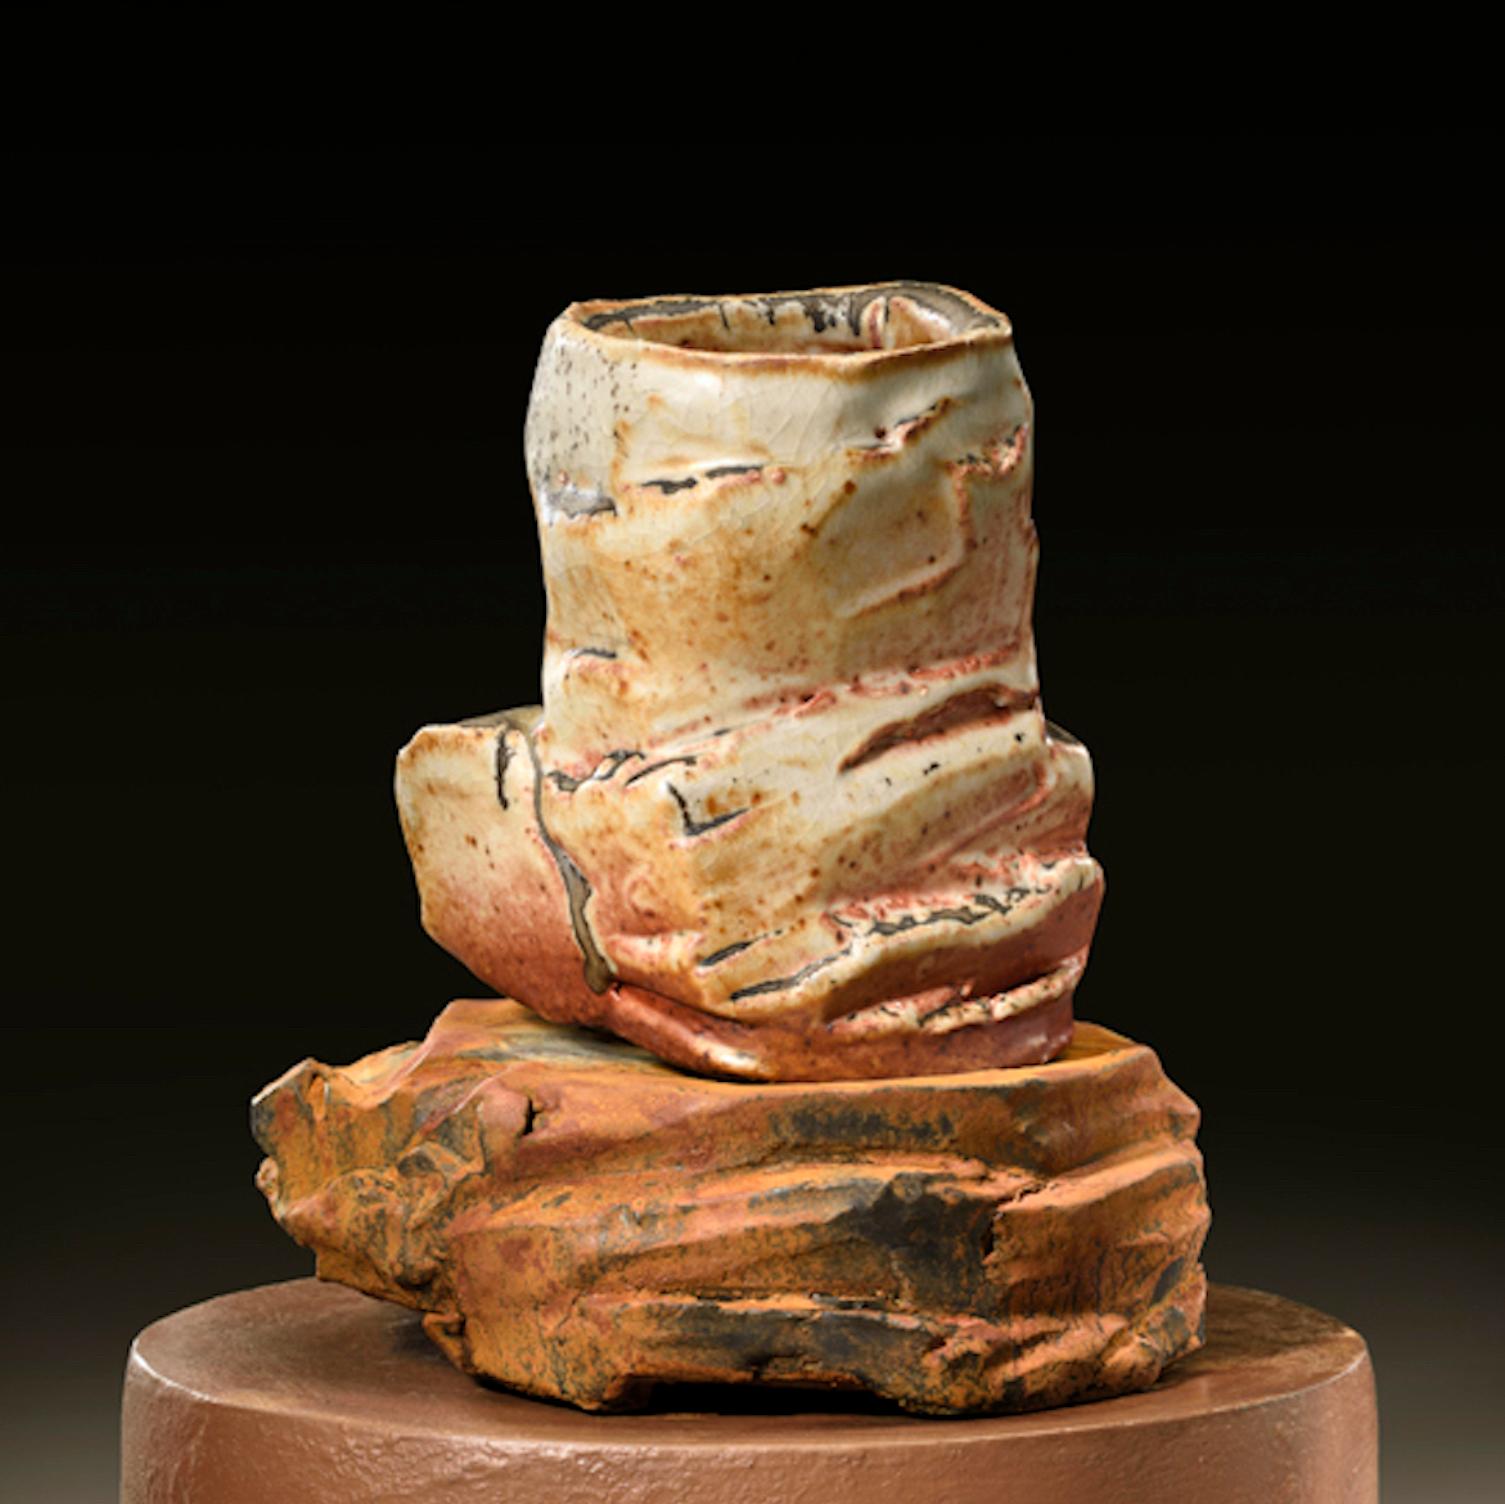 Glazed Richard Hirsch Ceramic Scholar Rock Cup Sculpture #19, 2016 For Sale